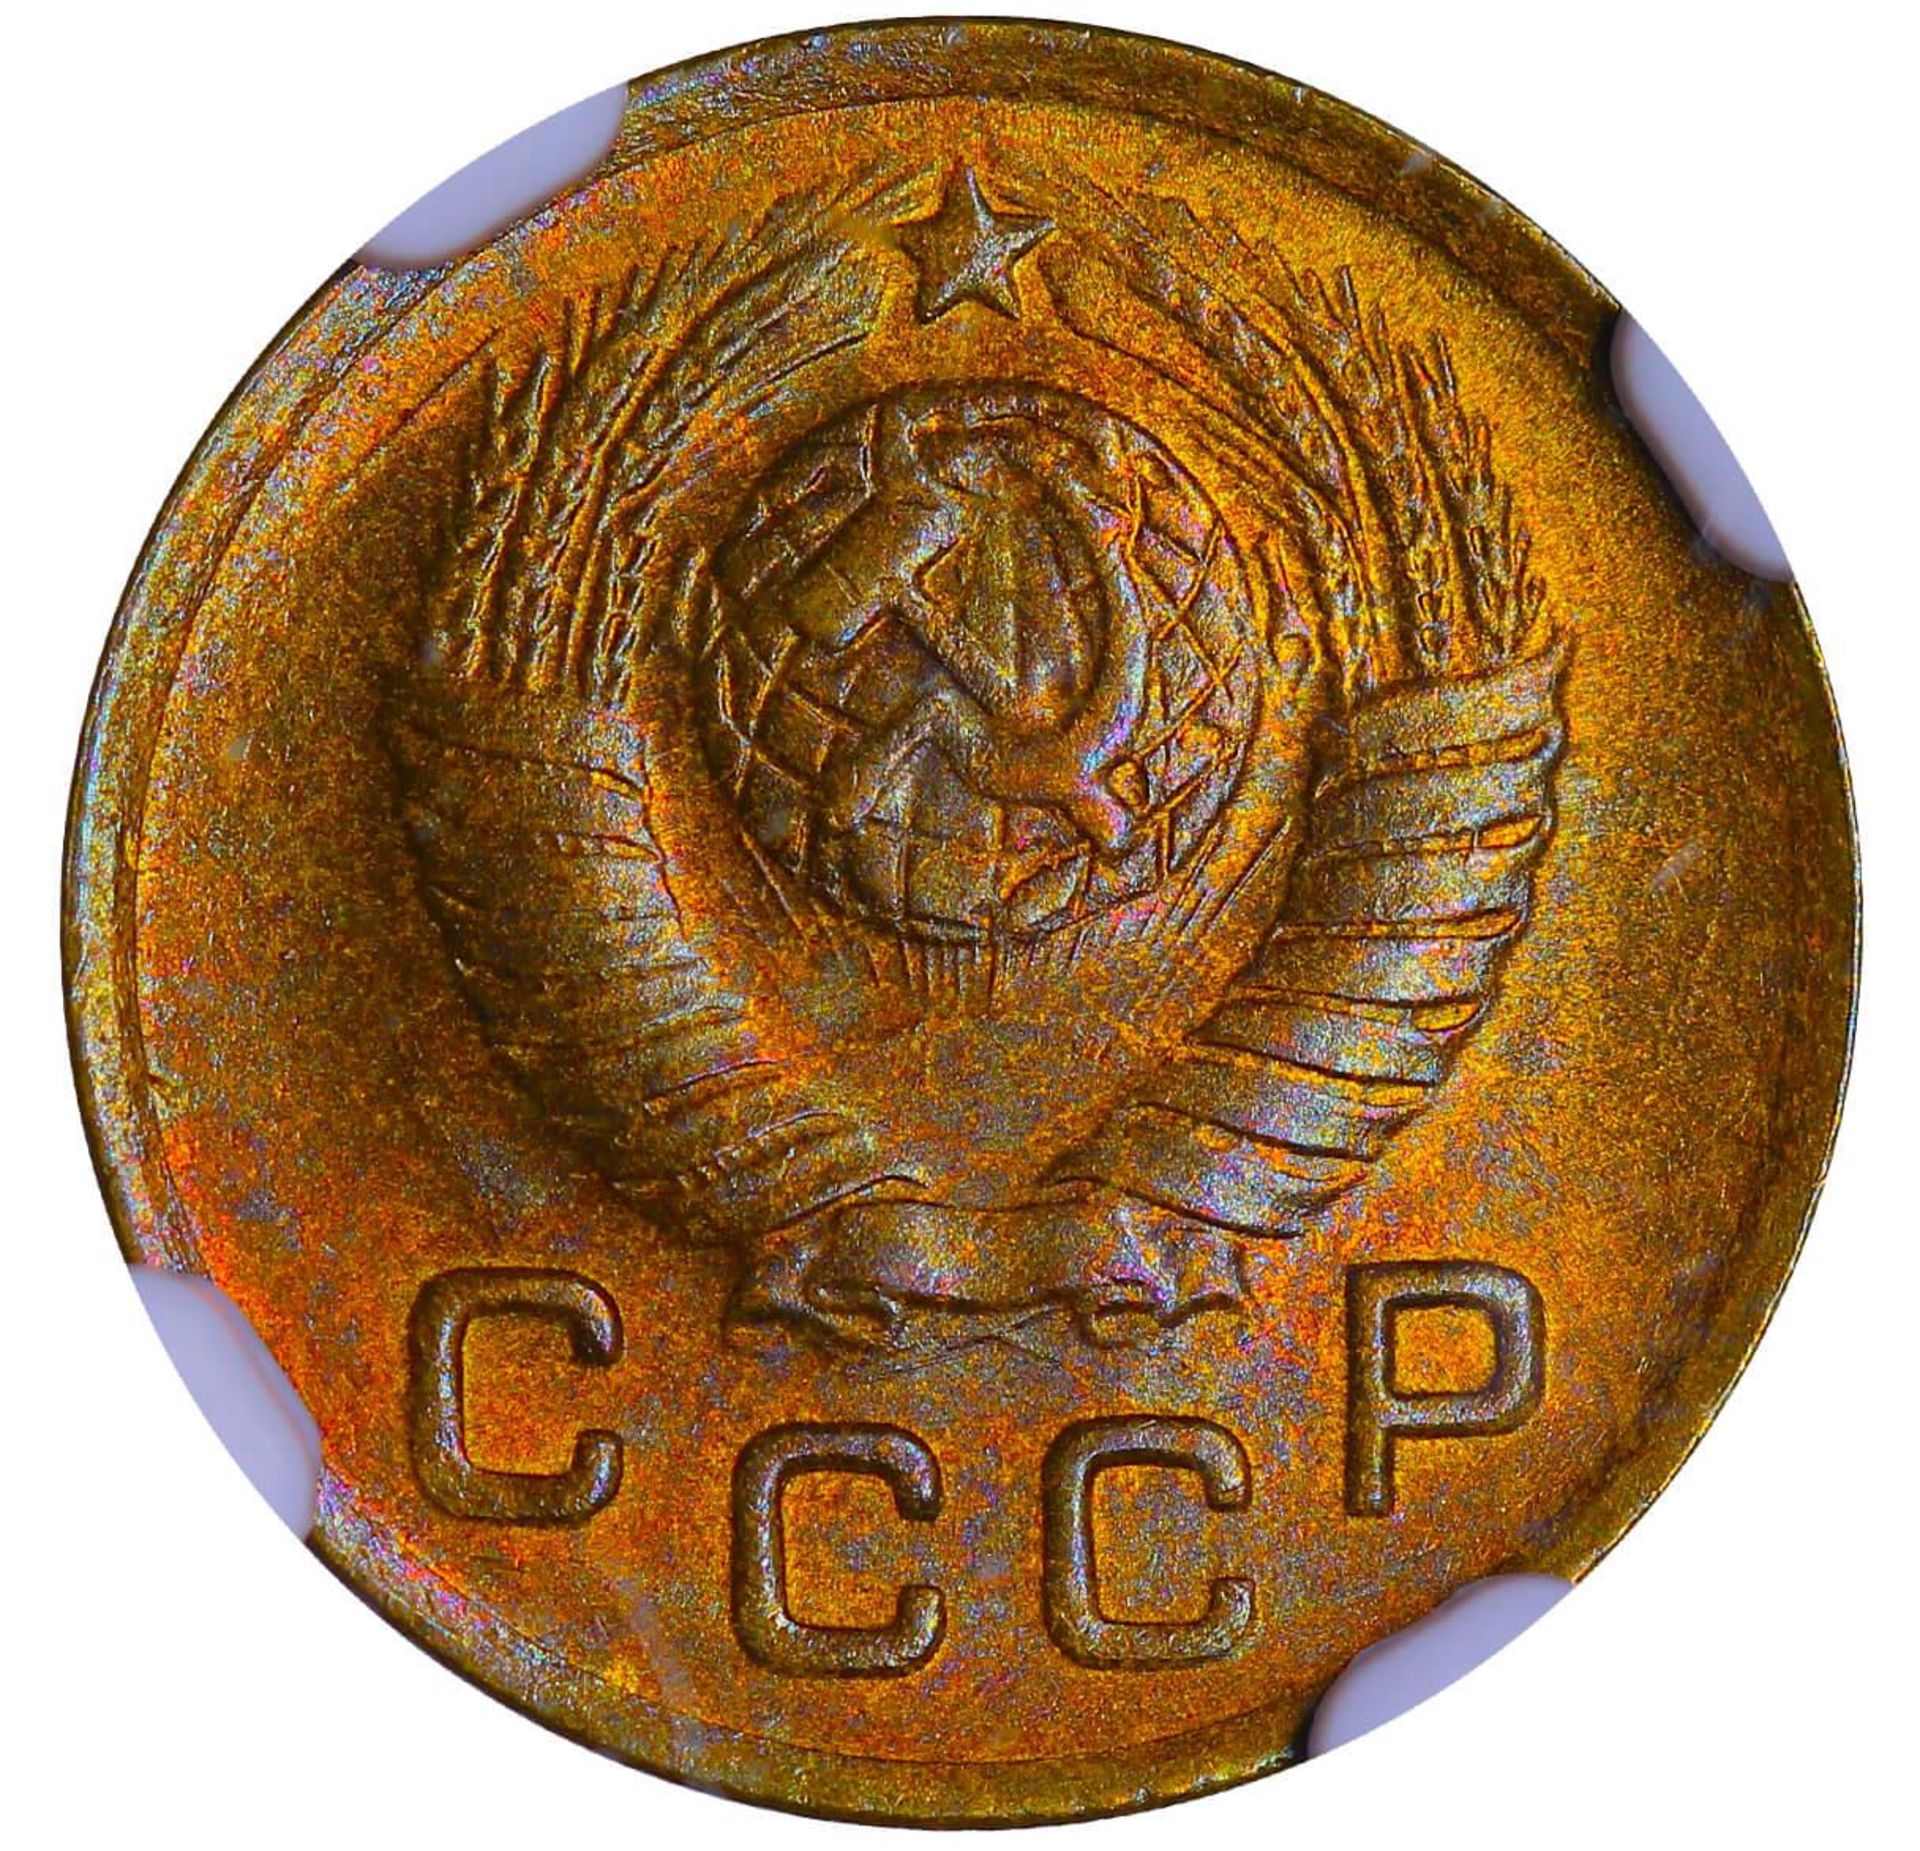 Soviet Union, 1 Kopeck, 1949 year, NGC, MS 65 - Image 3 of 3